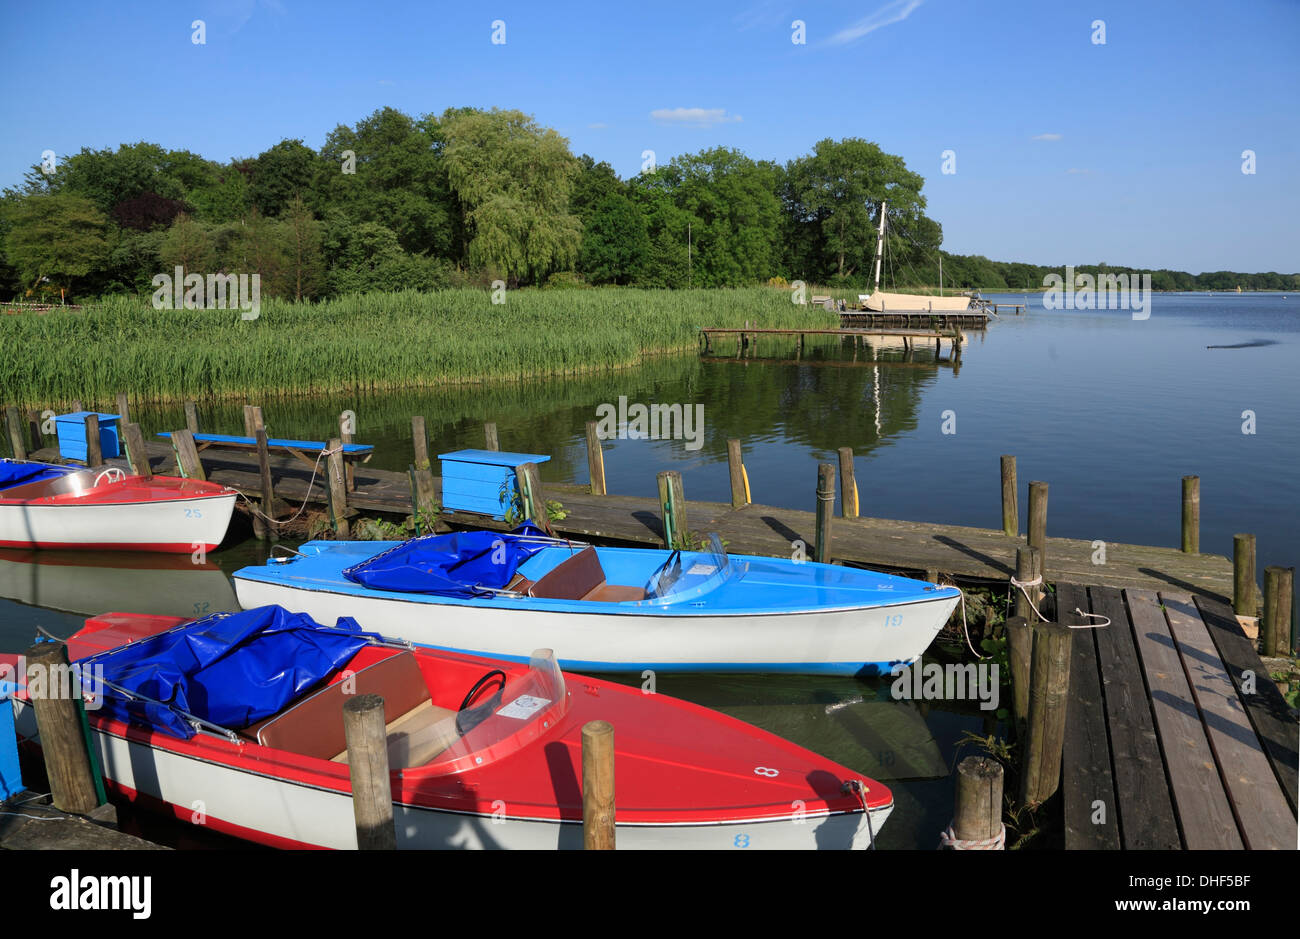 Paddleboats at Dreibergen, Ammerland region, Zwischenahner Meer, Lower Saxony, Germany Stock Photo